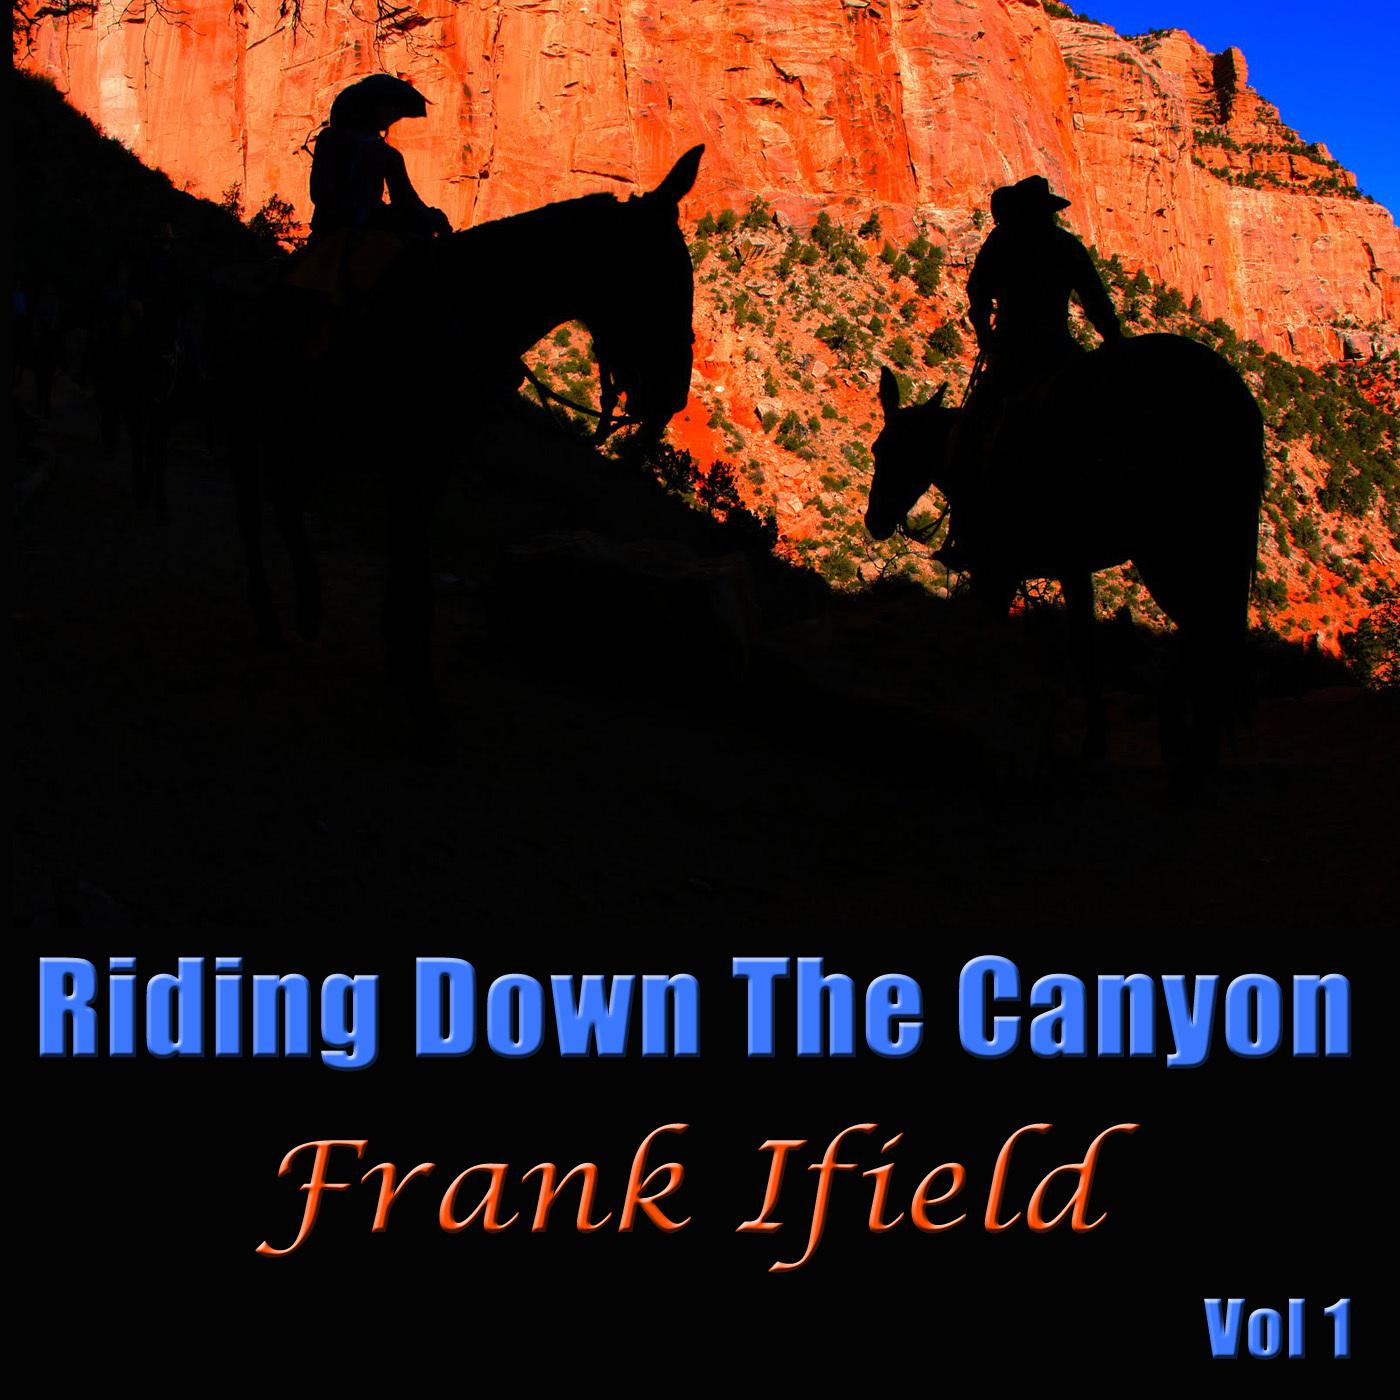 Riding Down The Canyon Vol 1